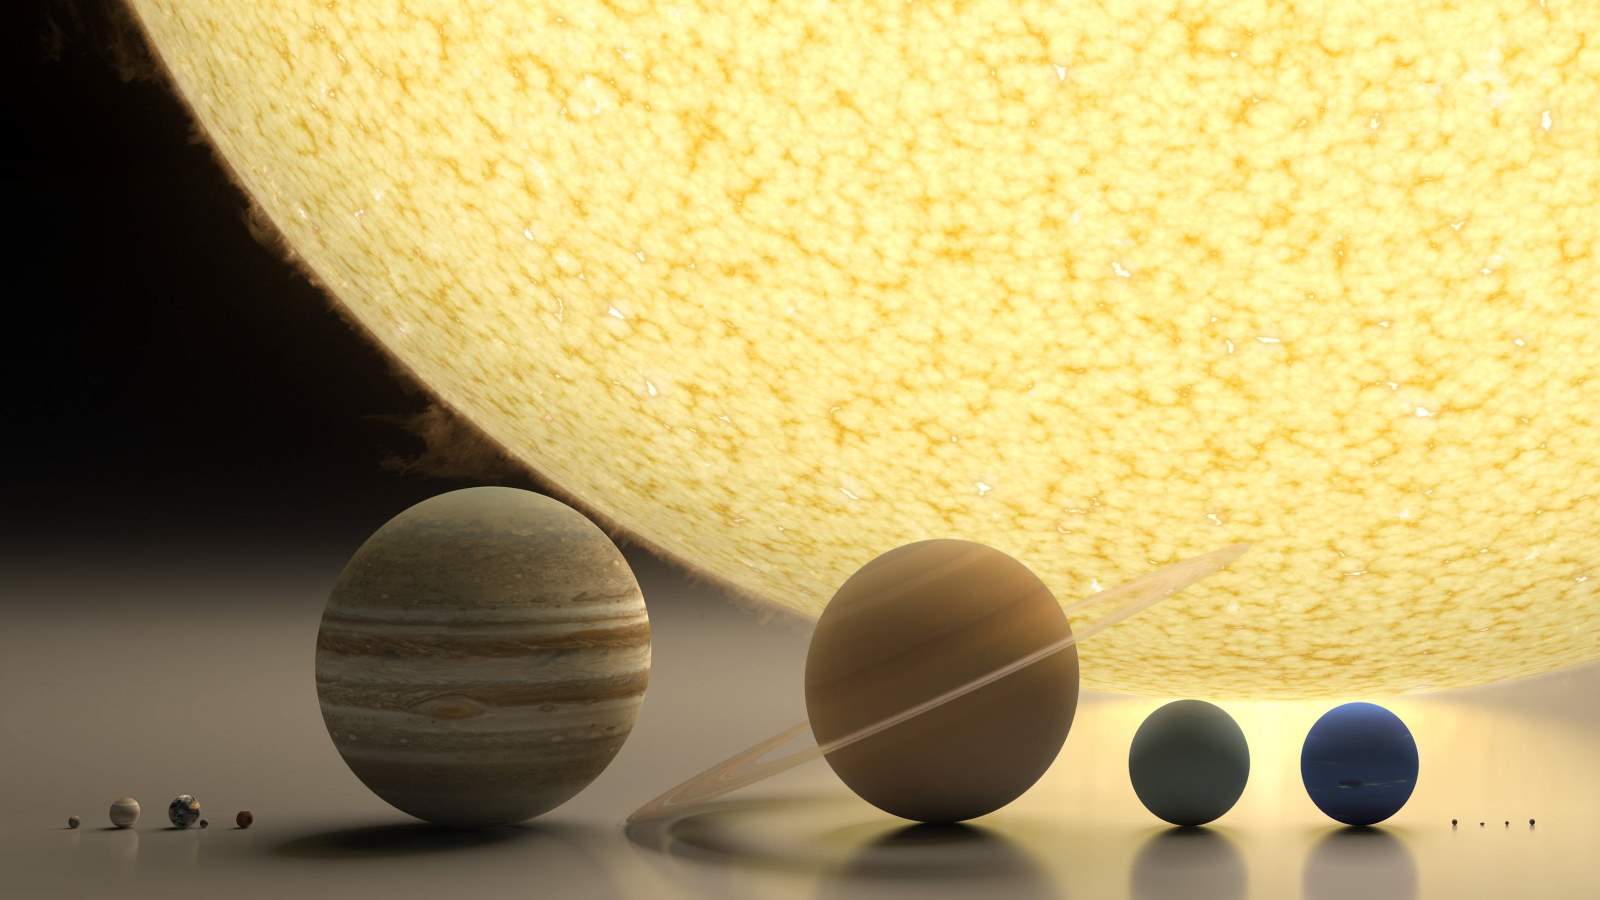 Sun, planets and dwarf planets size comparison